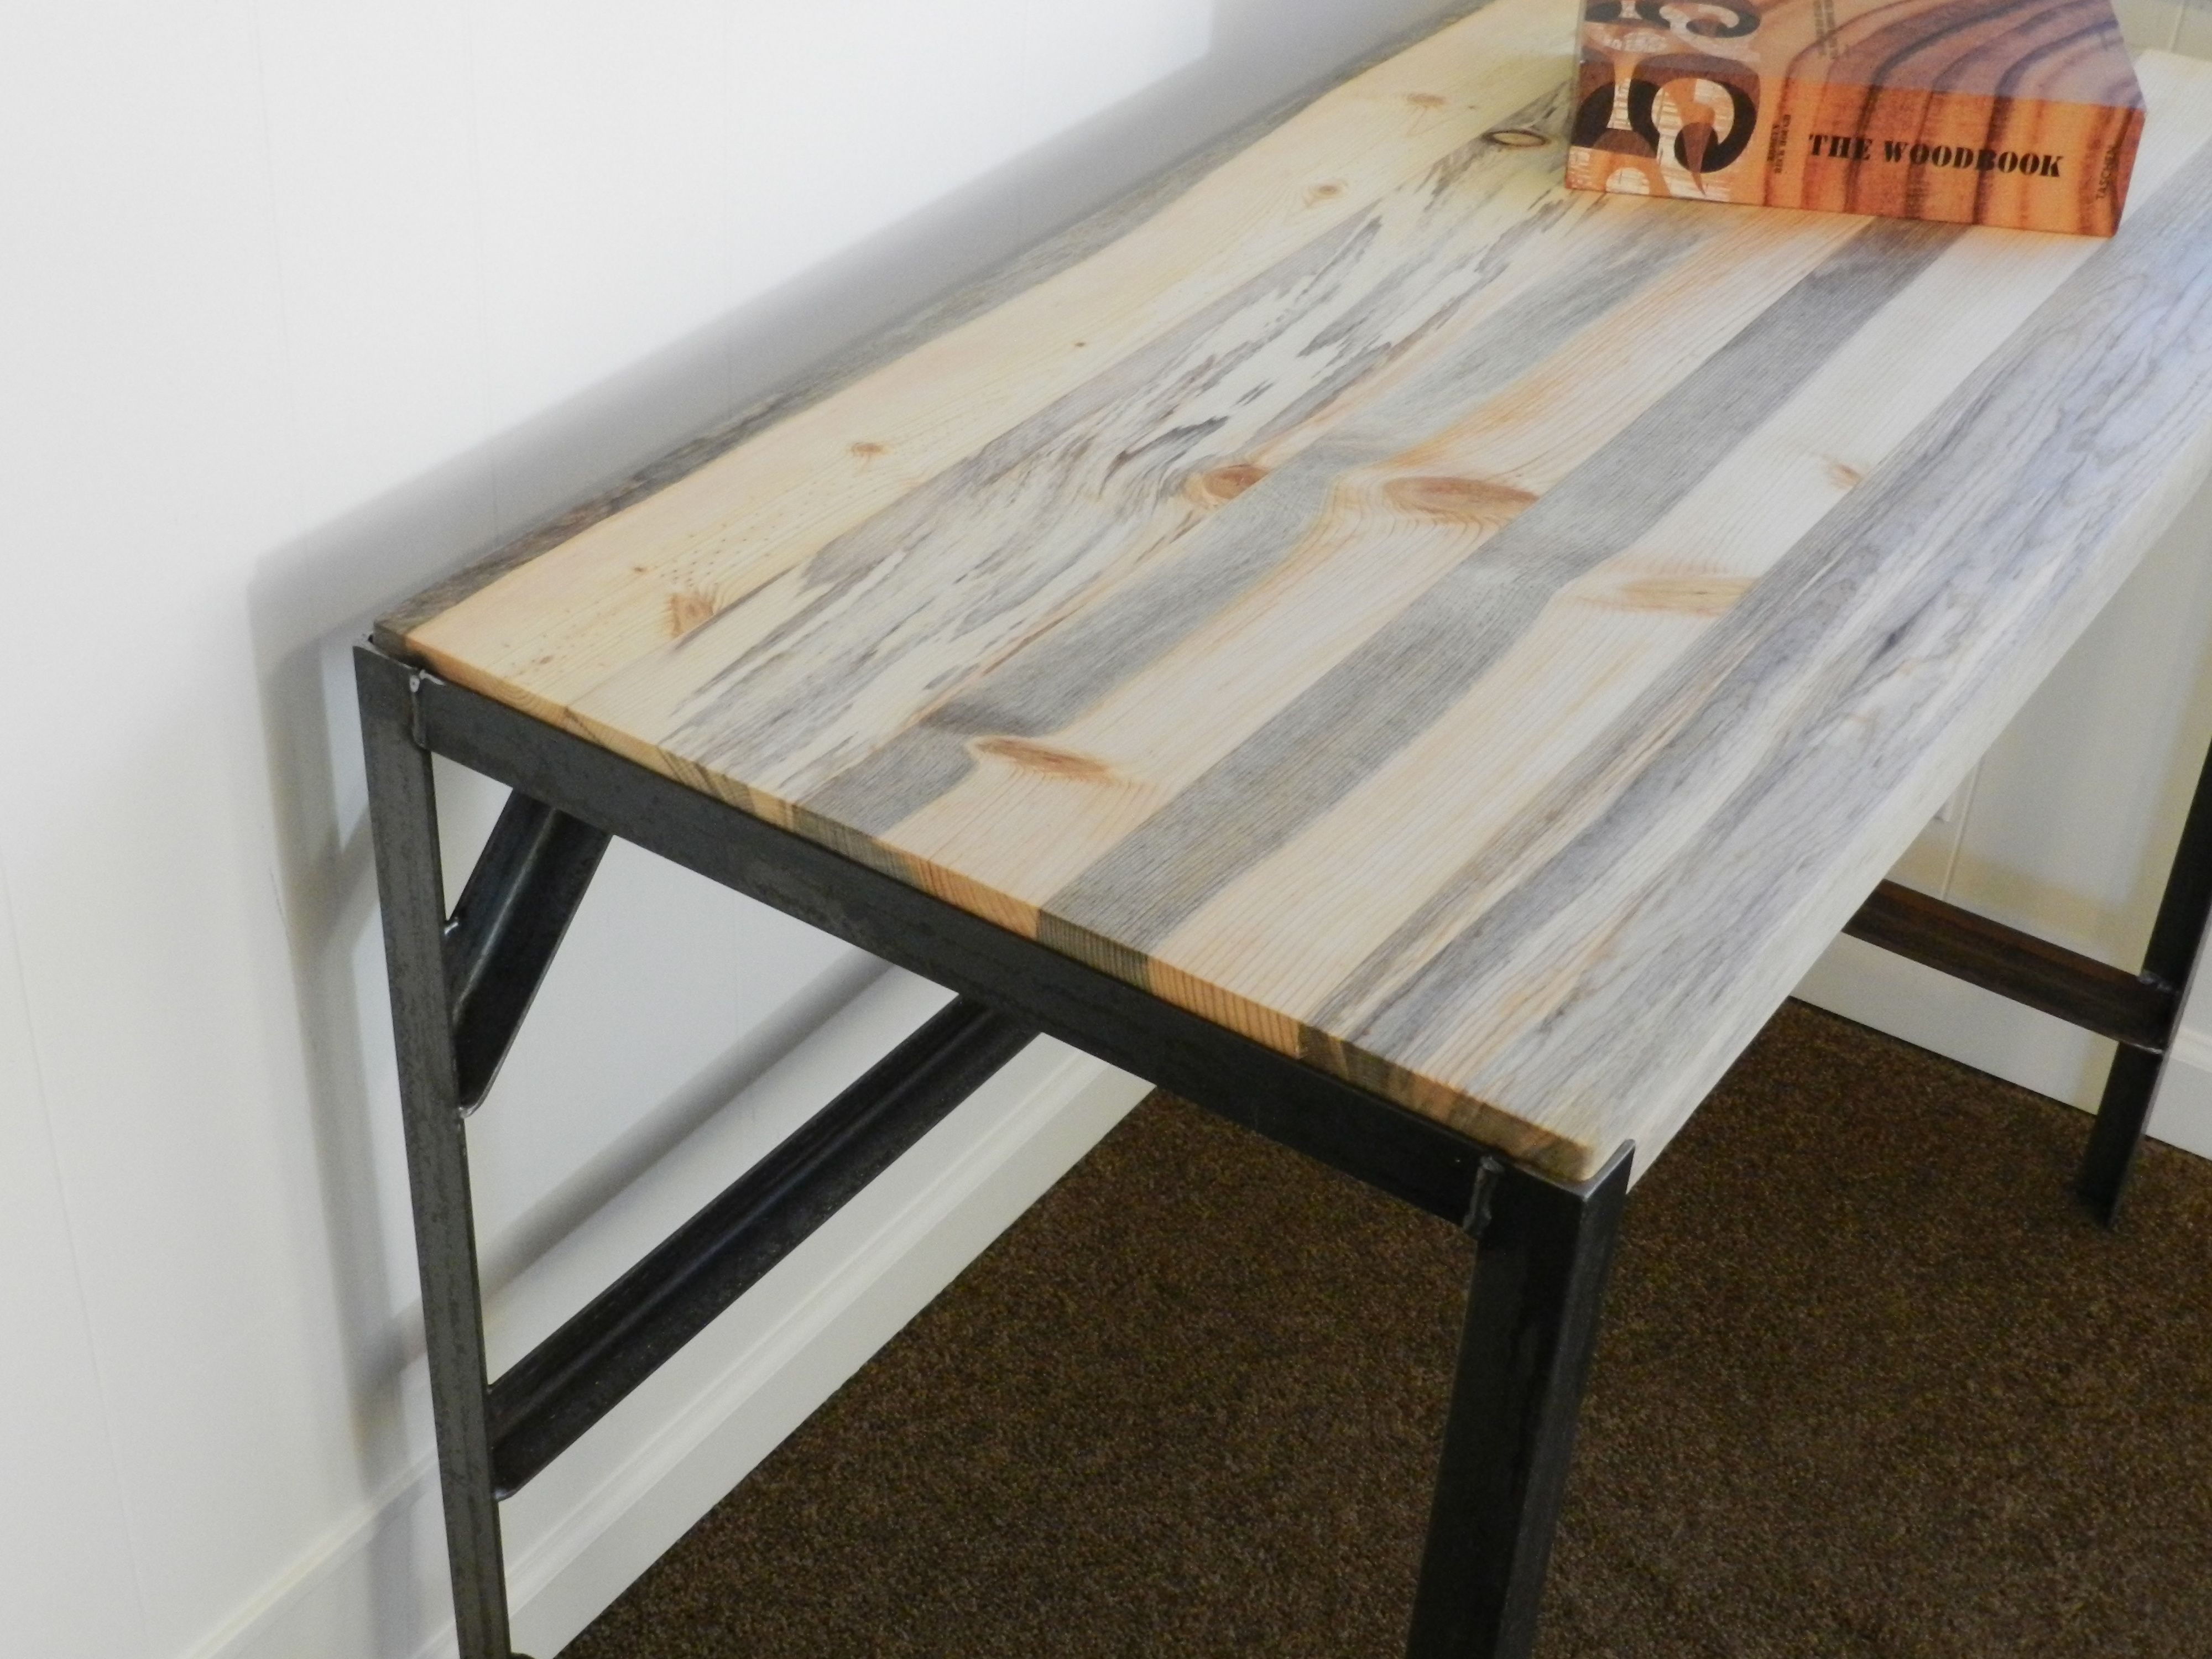 Custom Beetle Kill Desk Study Table By Purpose And Pine